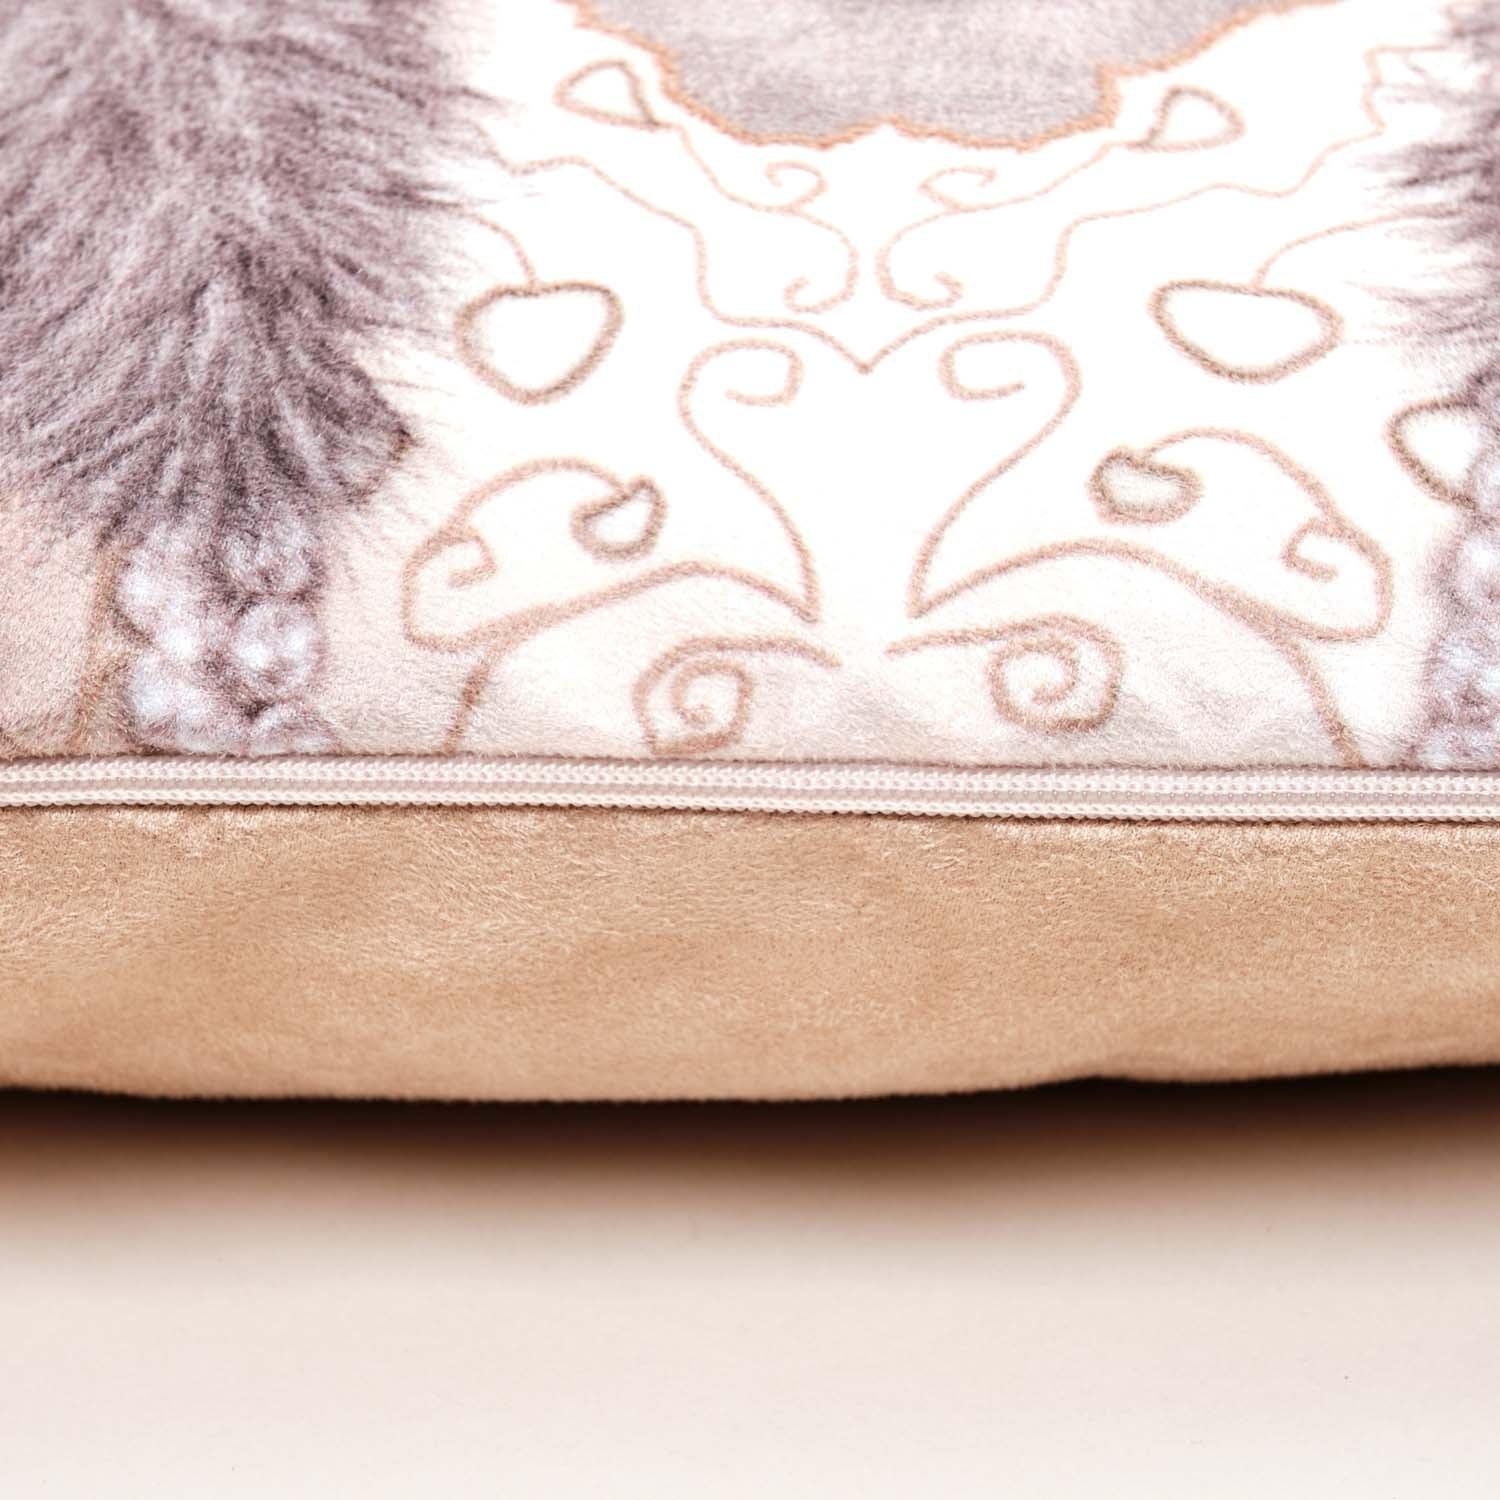 Gurl Sparkly - Pets Rock Cushion - Handmade Cushions UK - WeLoveCushions